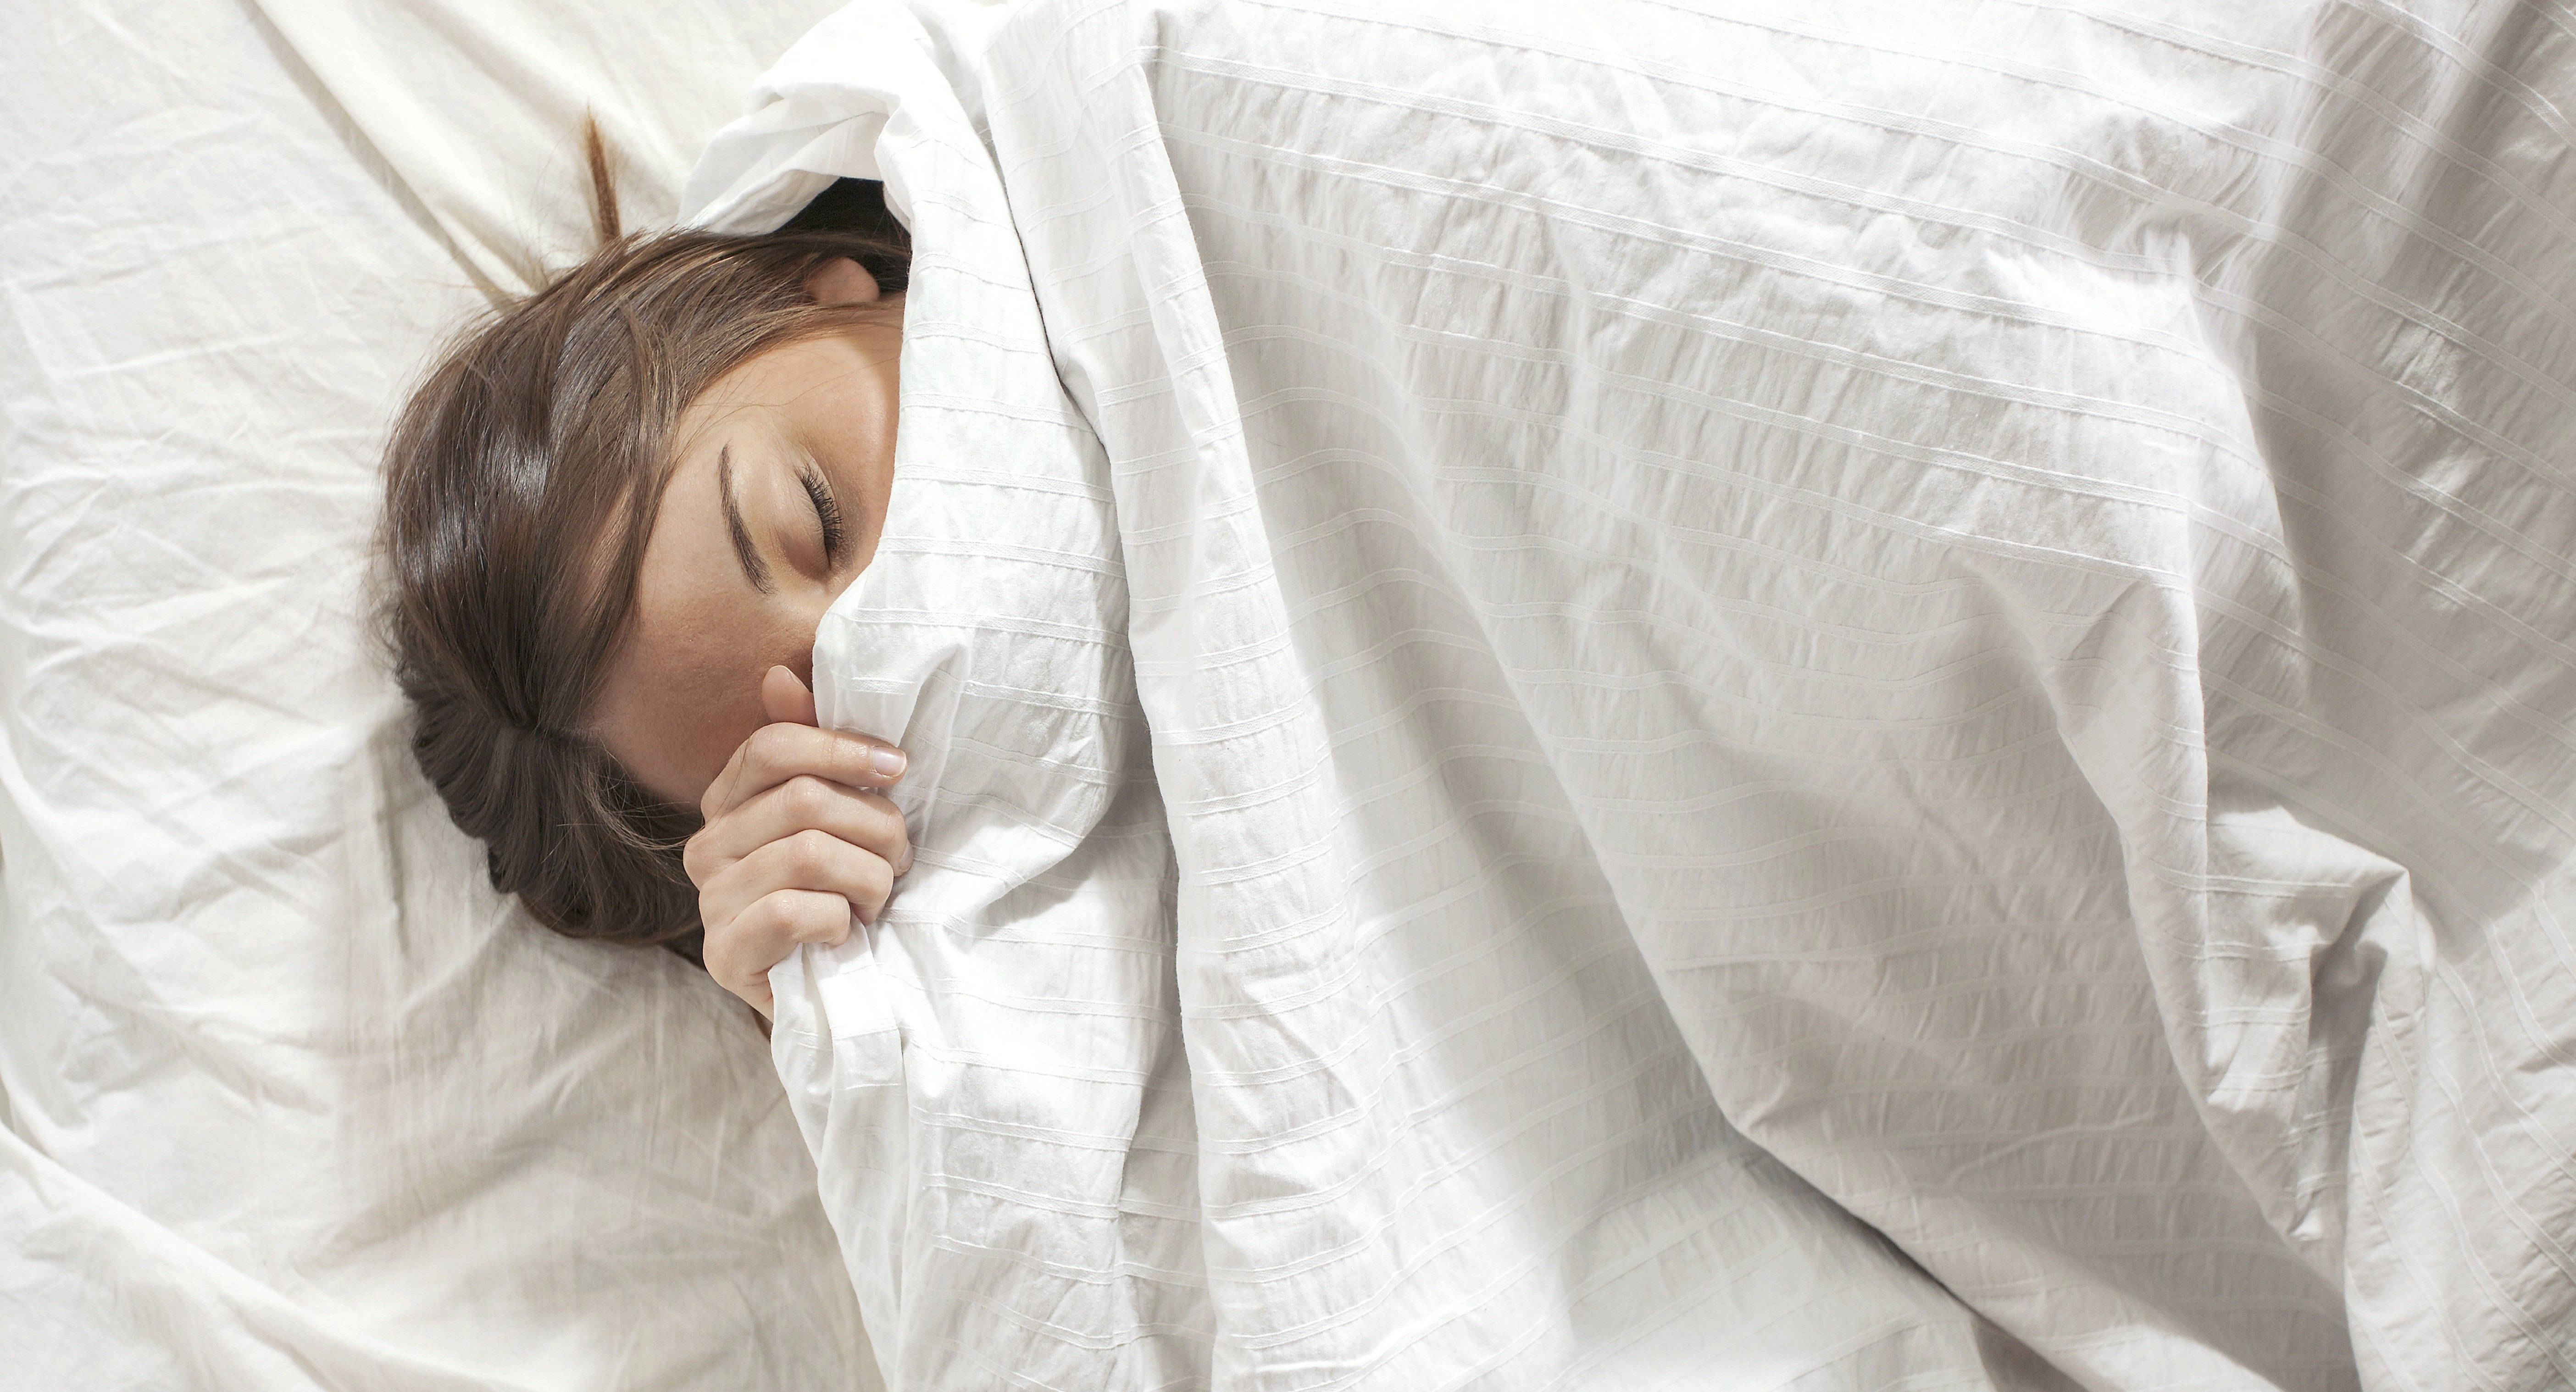 Сон дисен. Человек под одеялом. Одеяло. Девушка в одеяле. Здоровый сон.